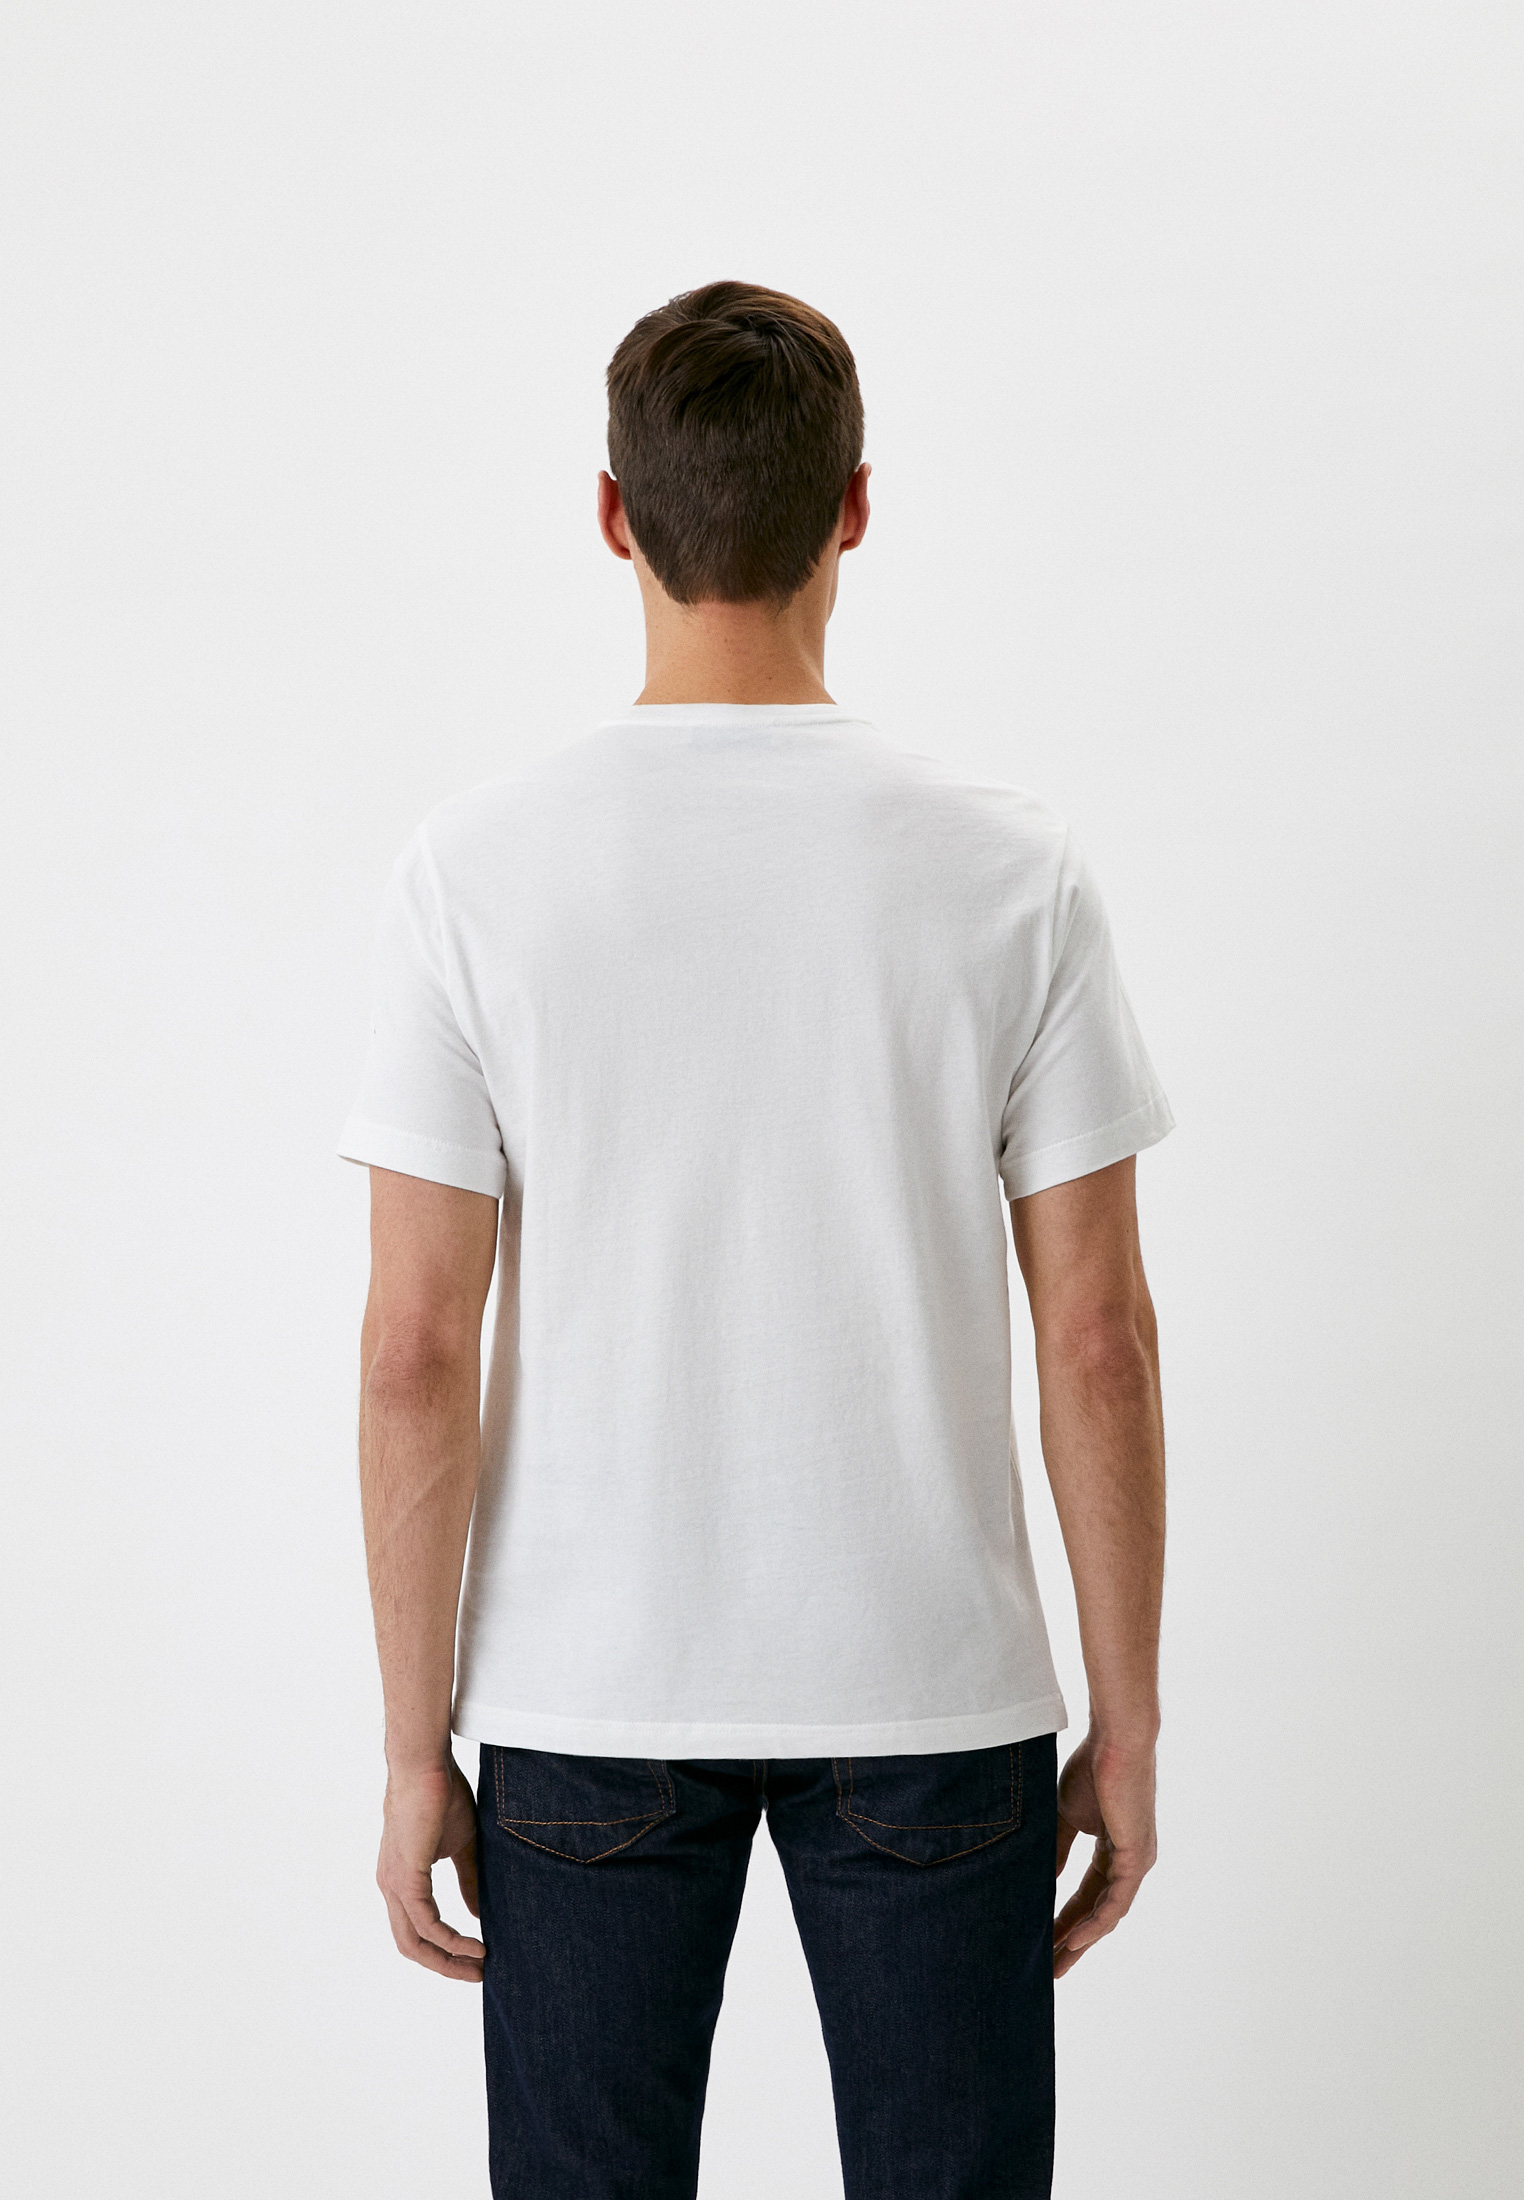 Мужская футболка Trussardi (Труссарди) 52T00615-1T005651: изображение 3